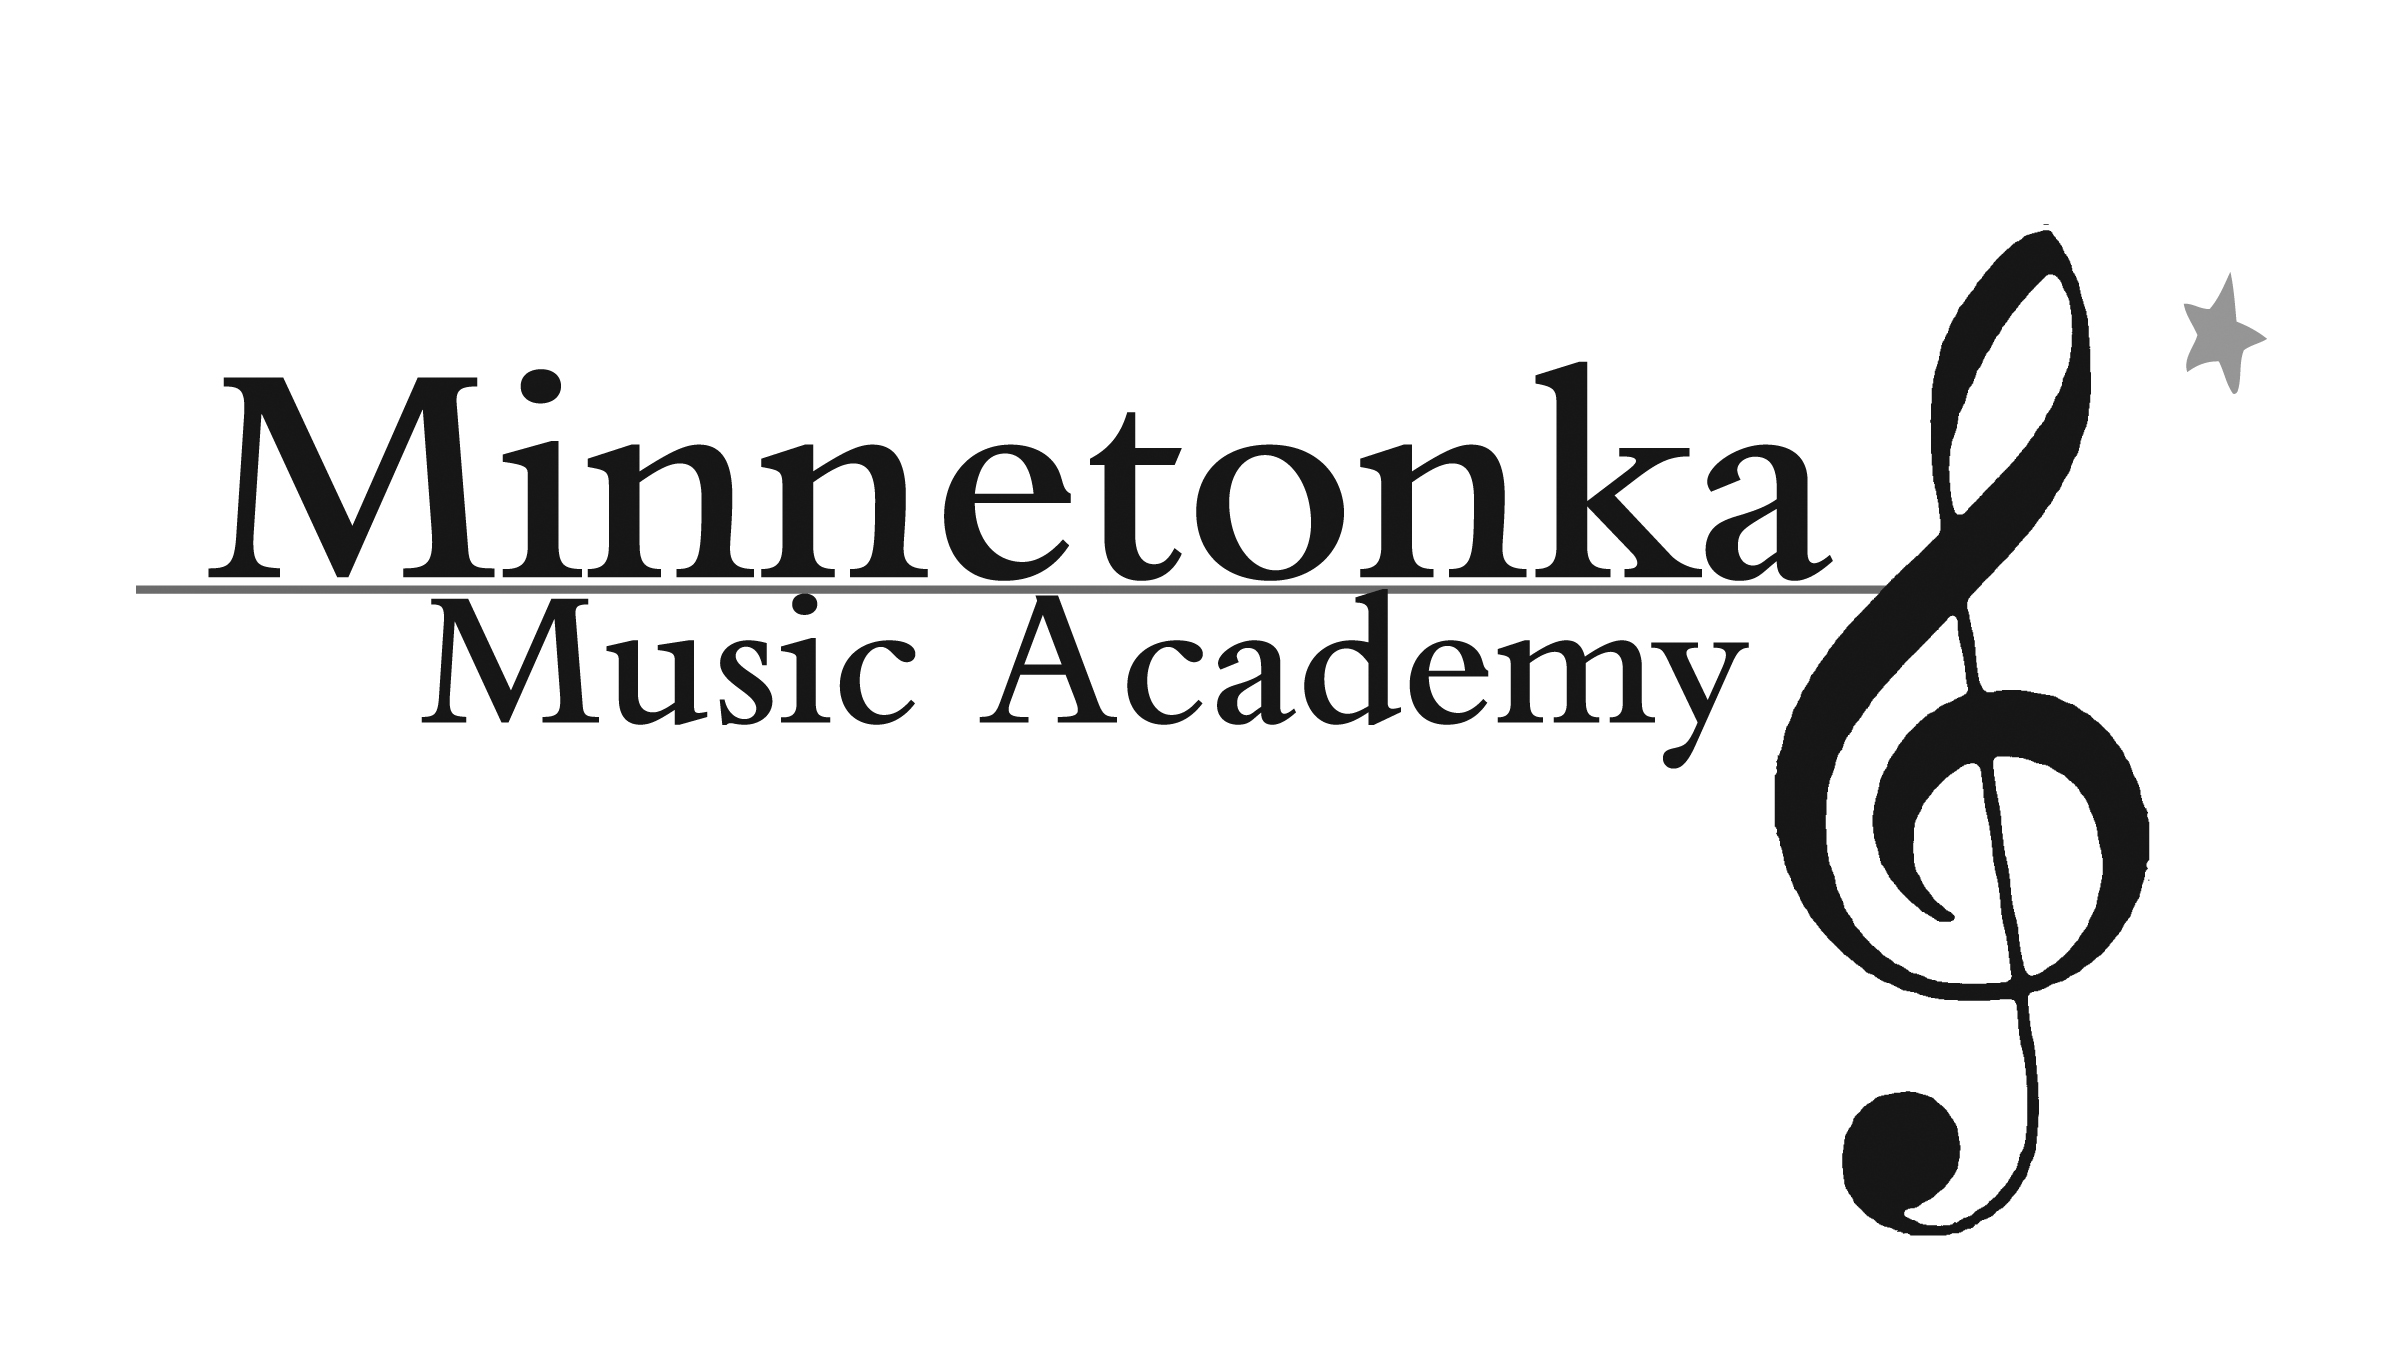 Minnetonka Music Academy